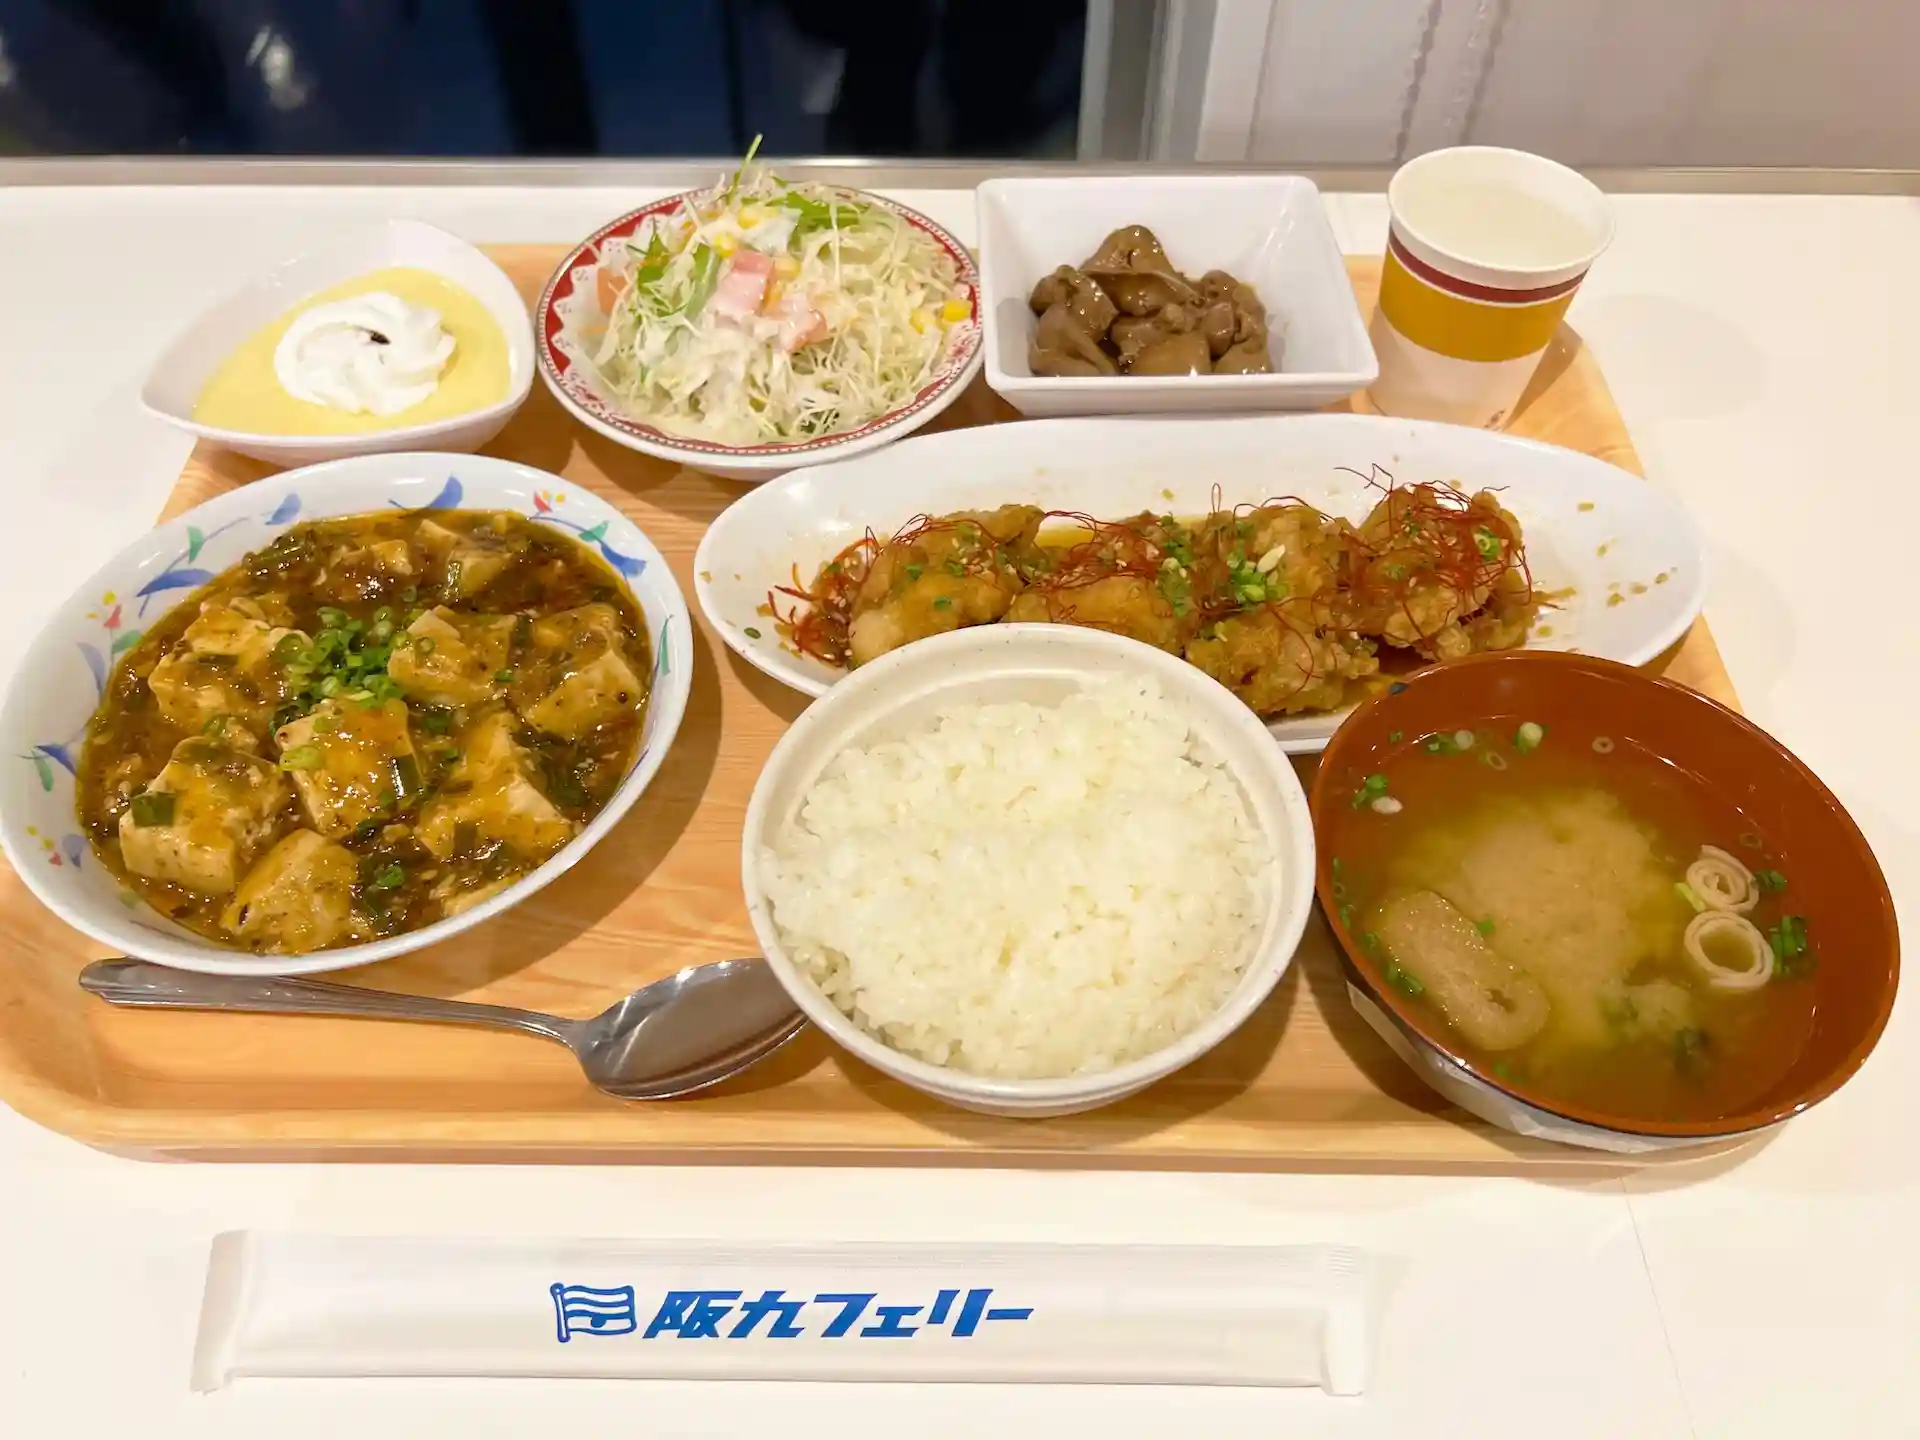 Plate of dinner offerings at the Hankyu Ferry SETTSU Restaurant